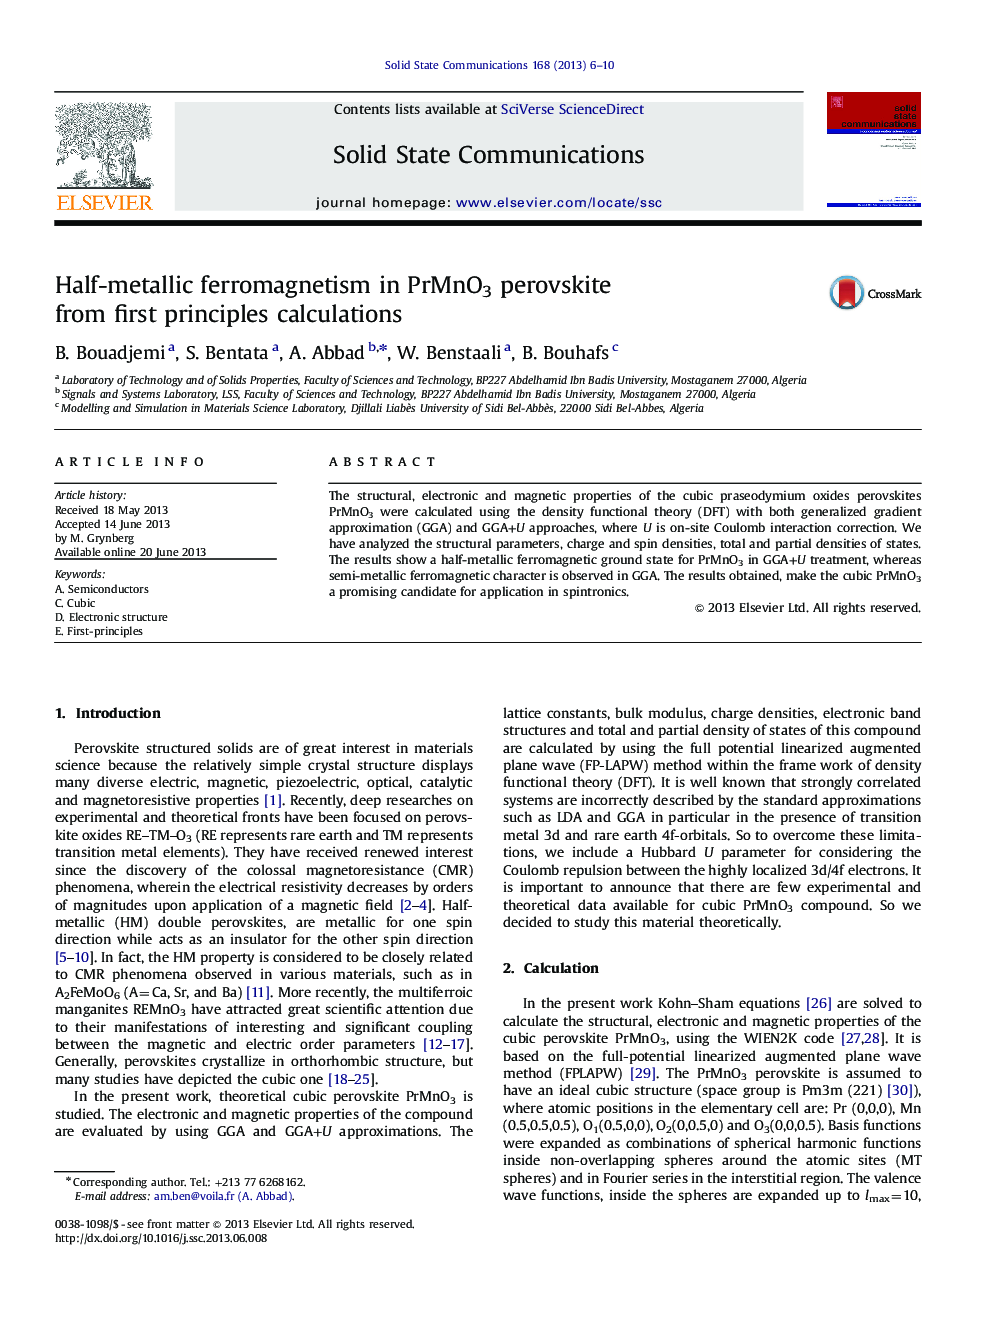 Half-metallic ferromagnetism in PrMnO3 perovskite from first principles calculations